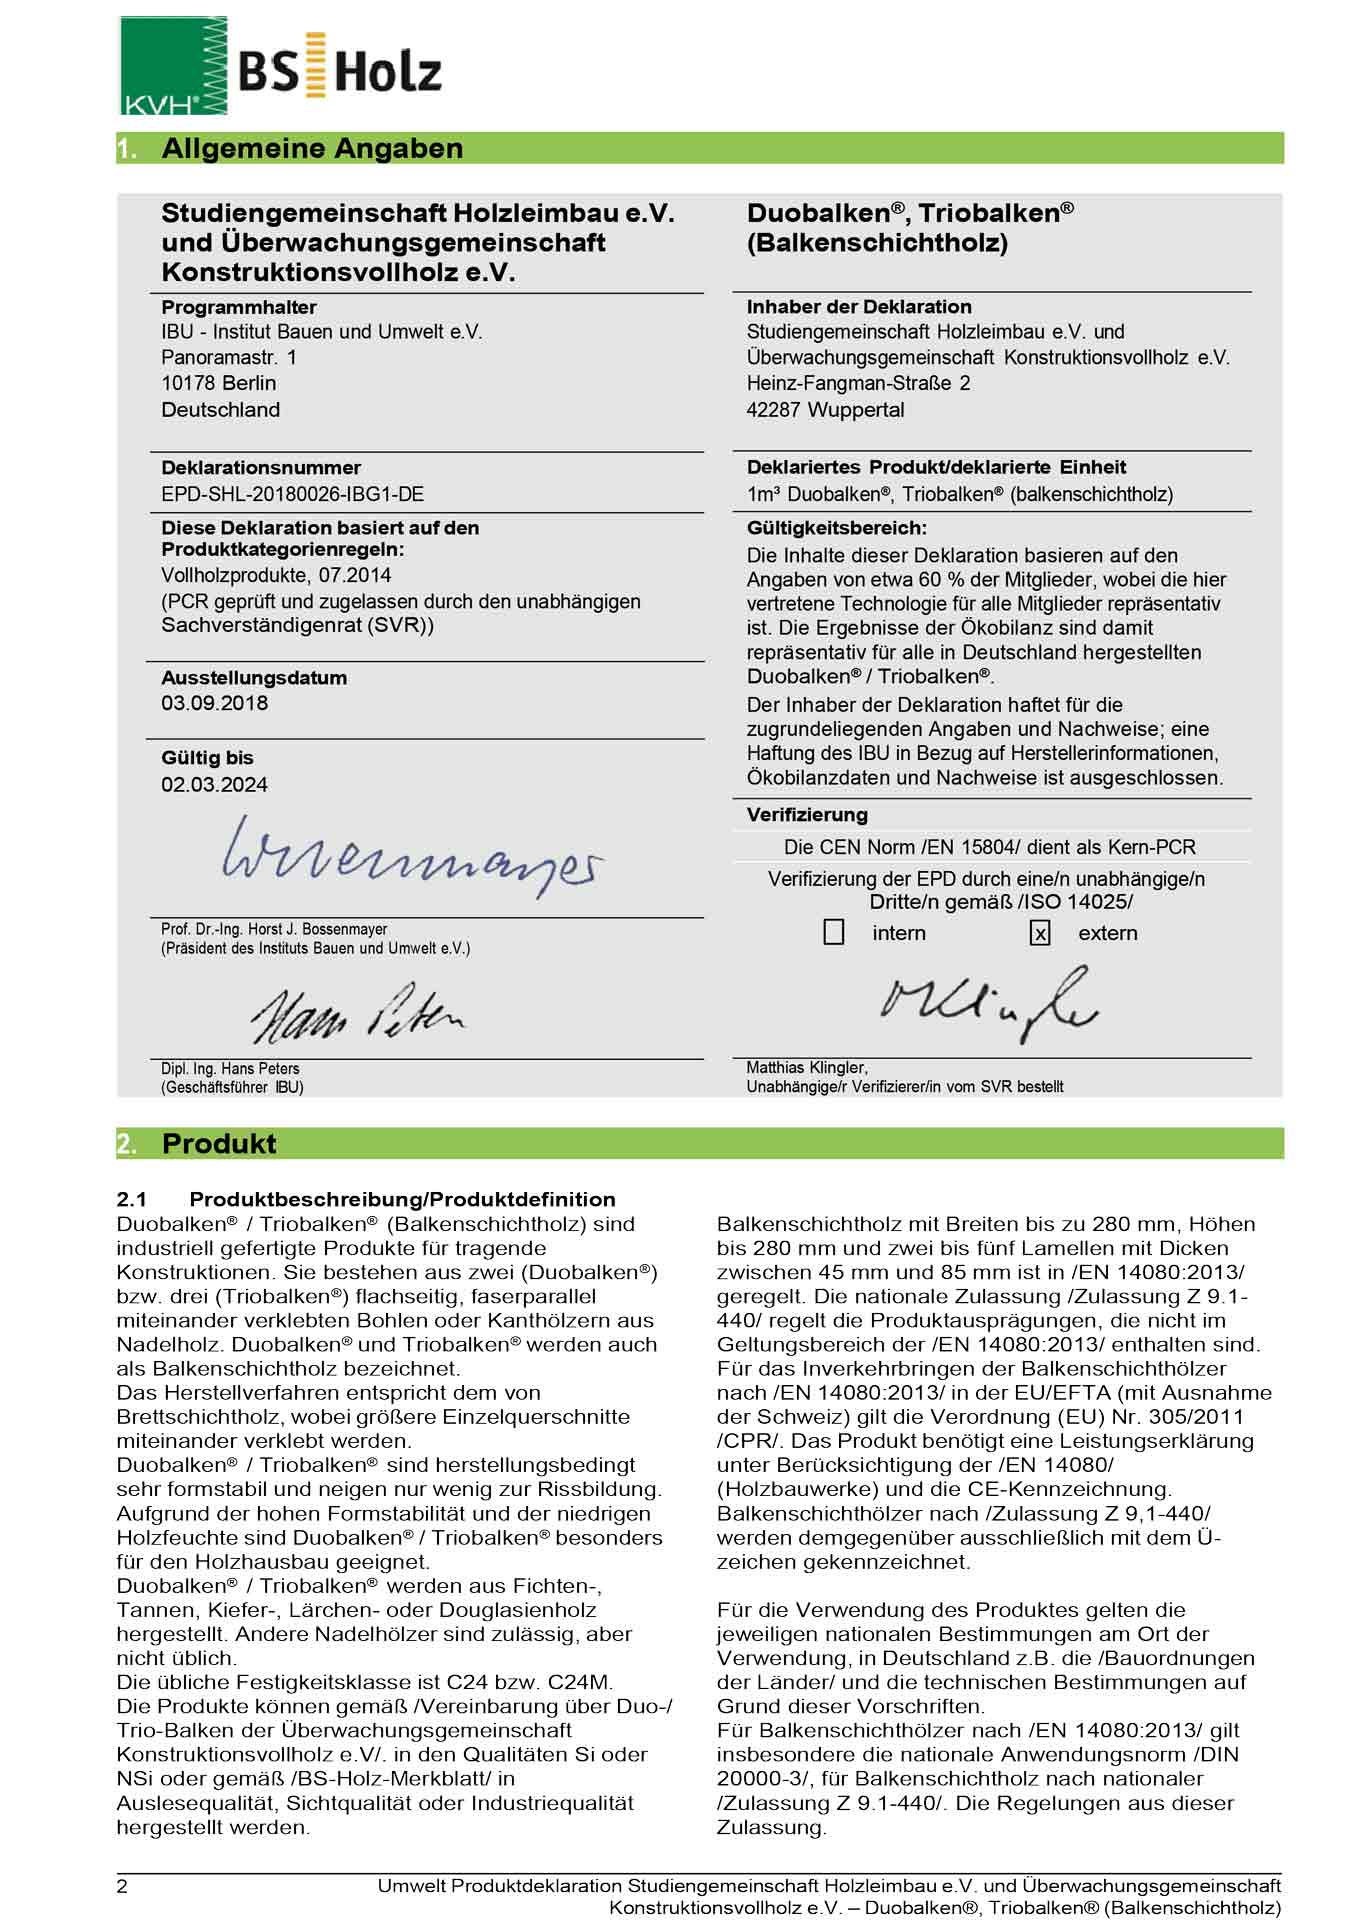 StgHb_Umweltdeklaration_Duo-Triobalken_2018_IHB_D_2024-03-02-2